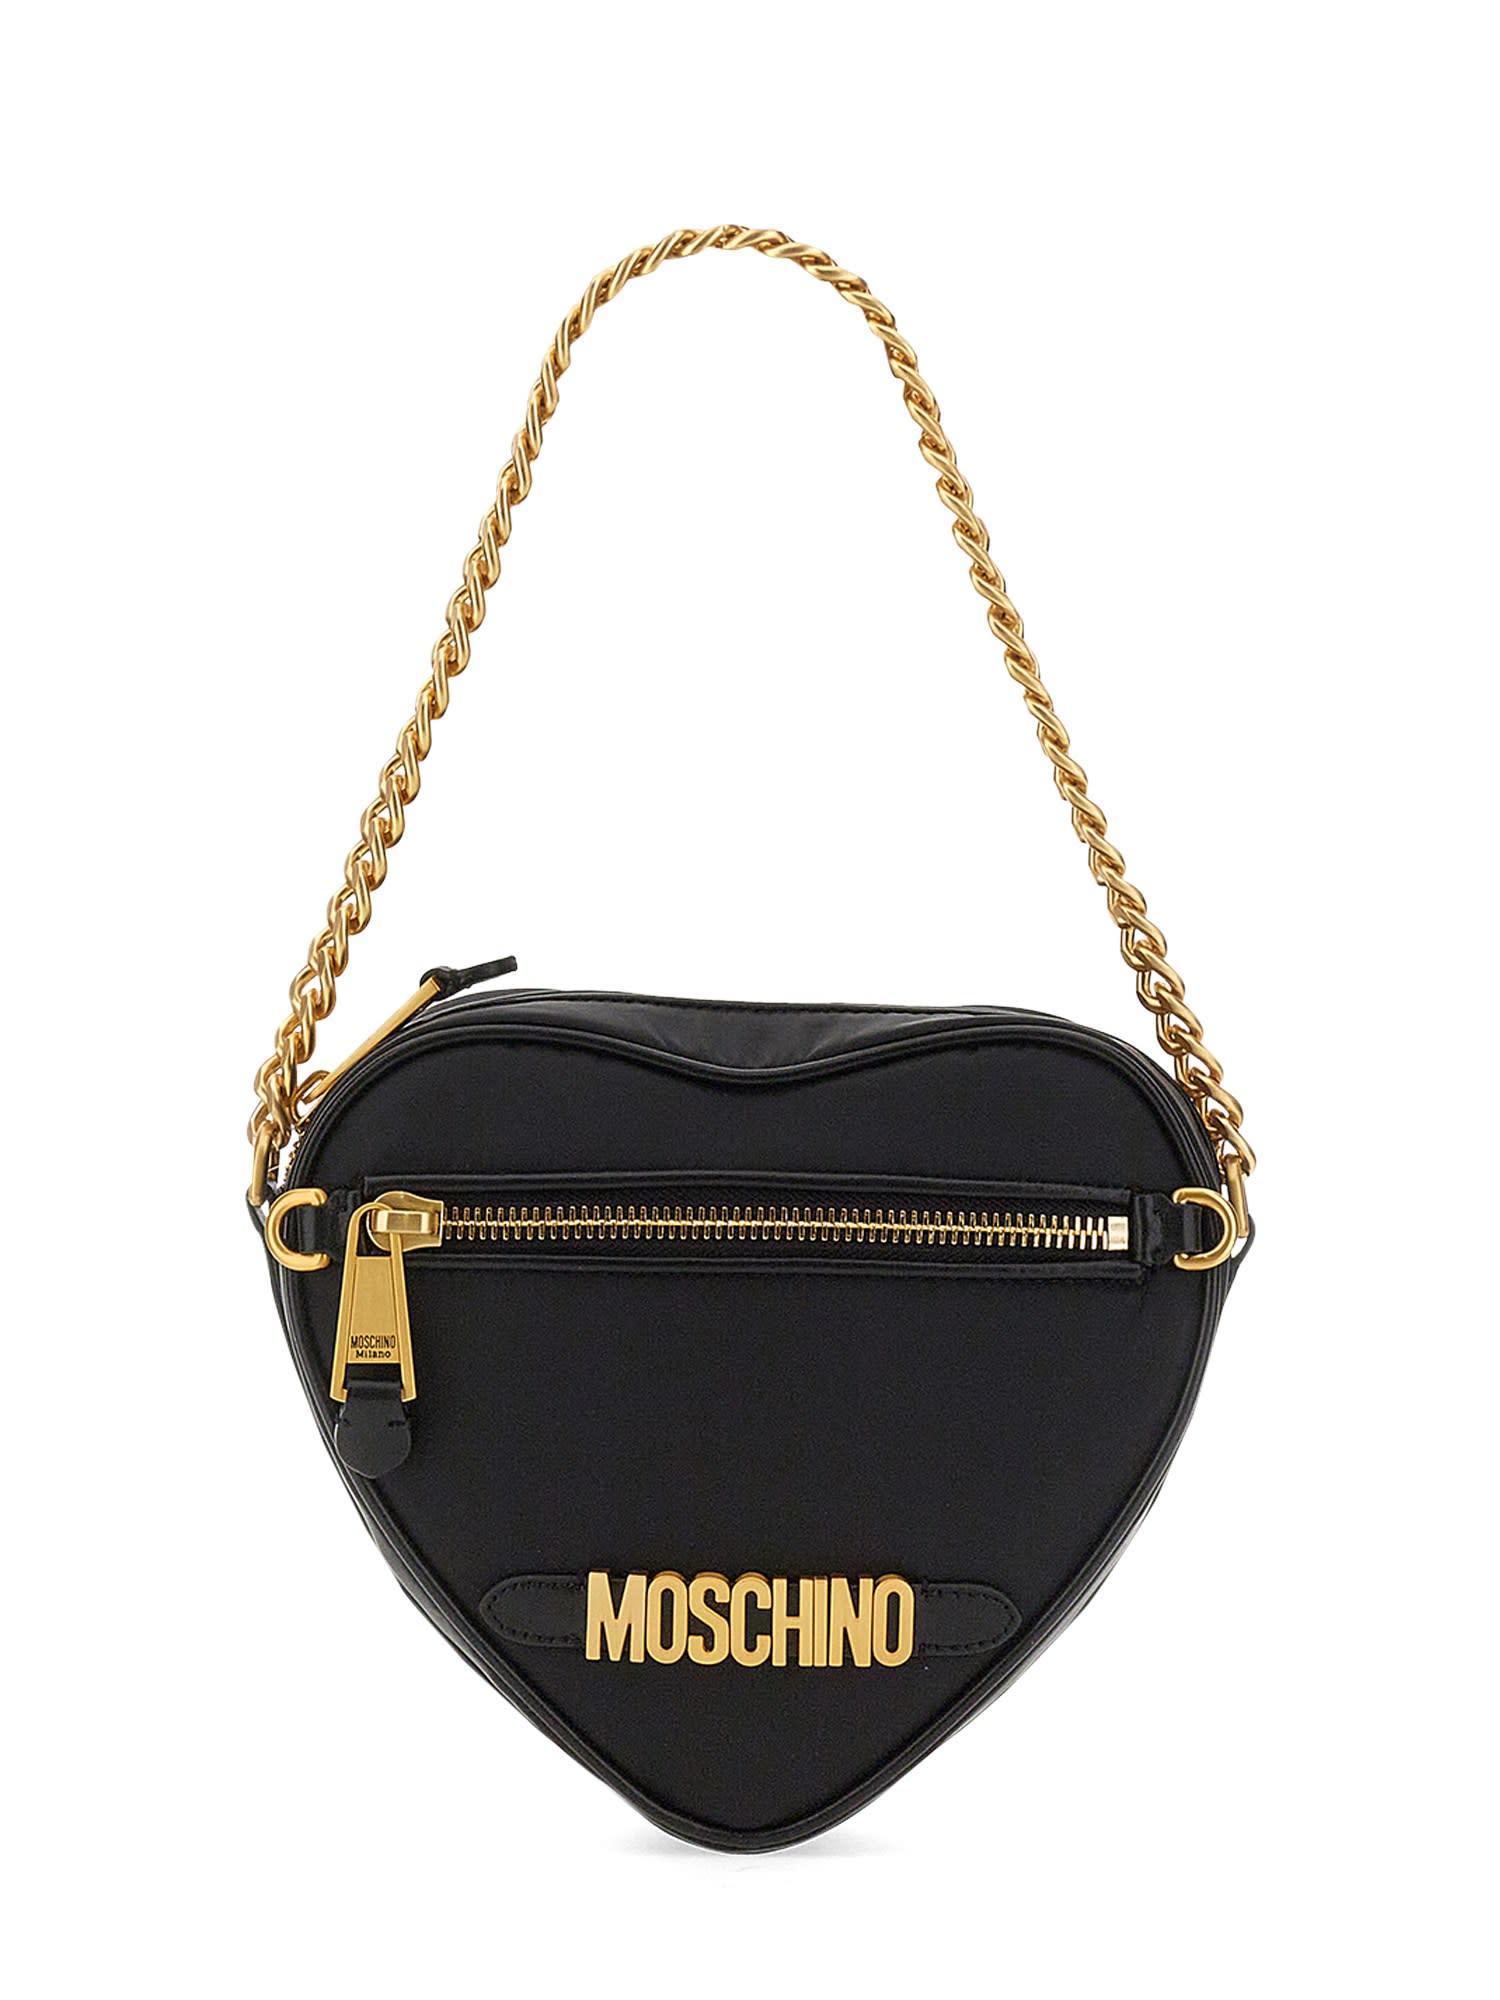 Moschino Heart Shape Nylon Shoulder Bag in Black | Lyst